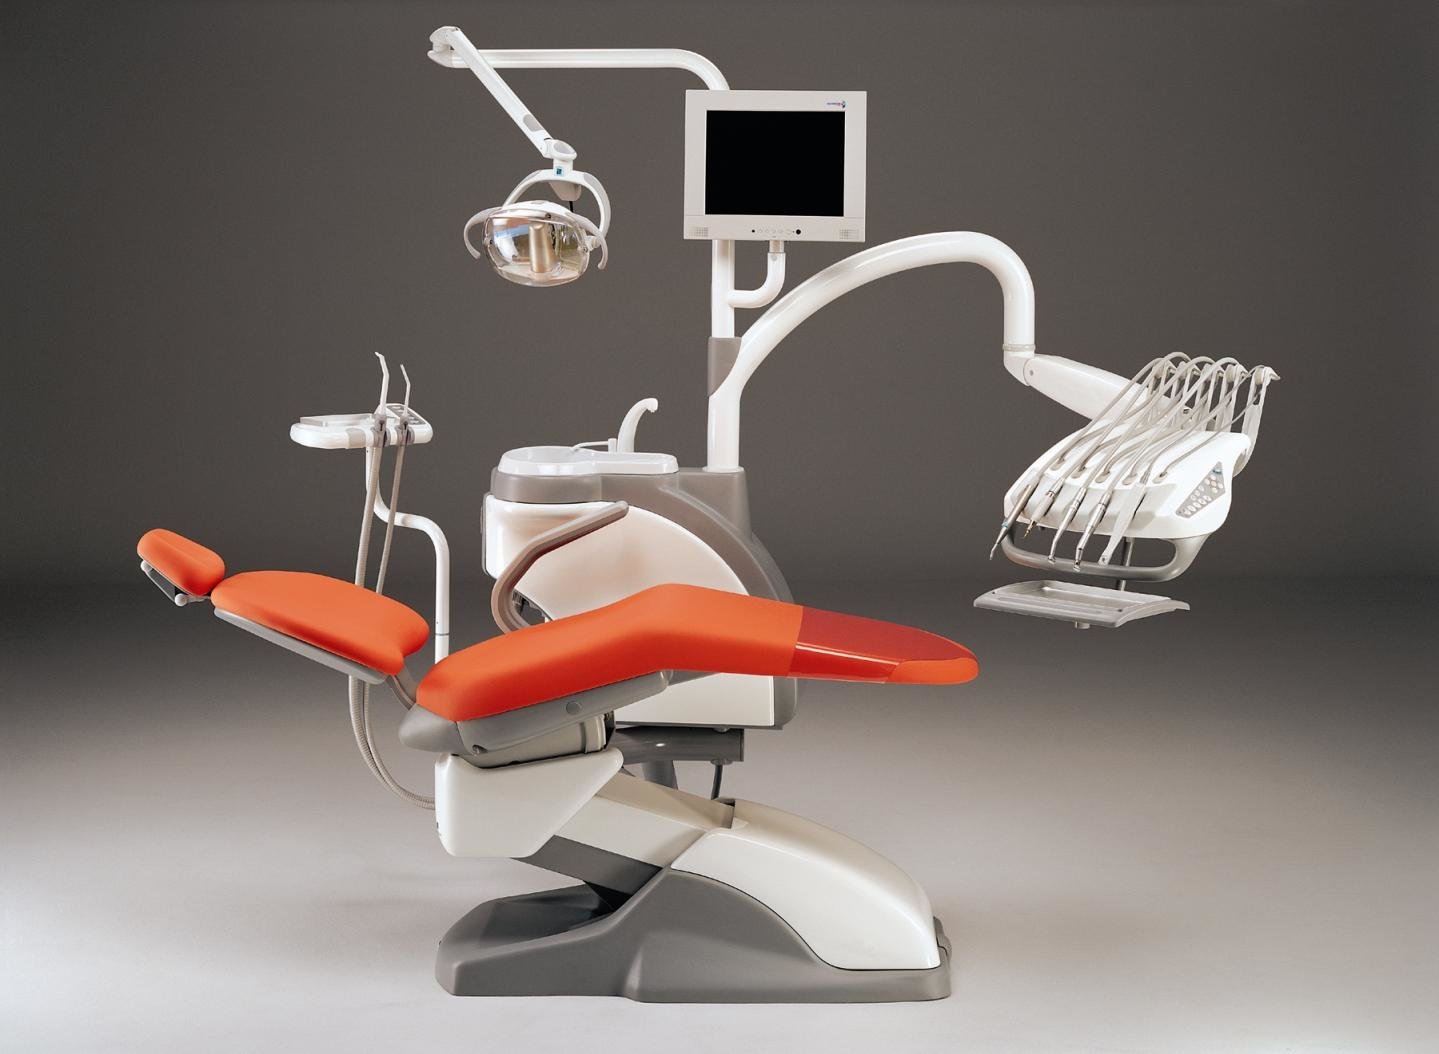 Global Dental Imaging Equipment Industry